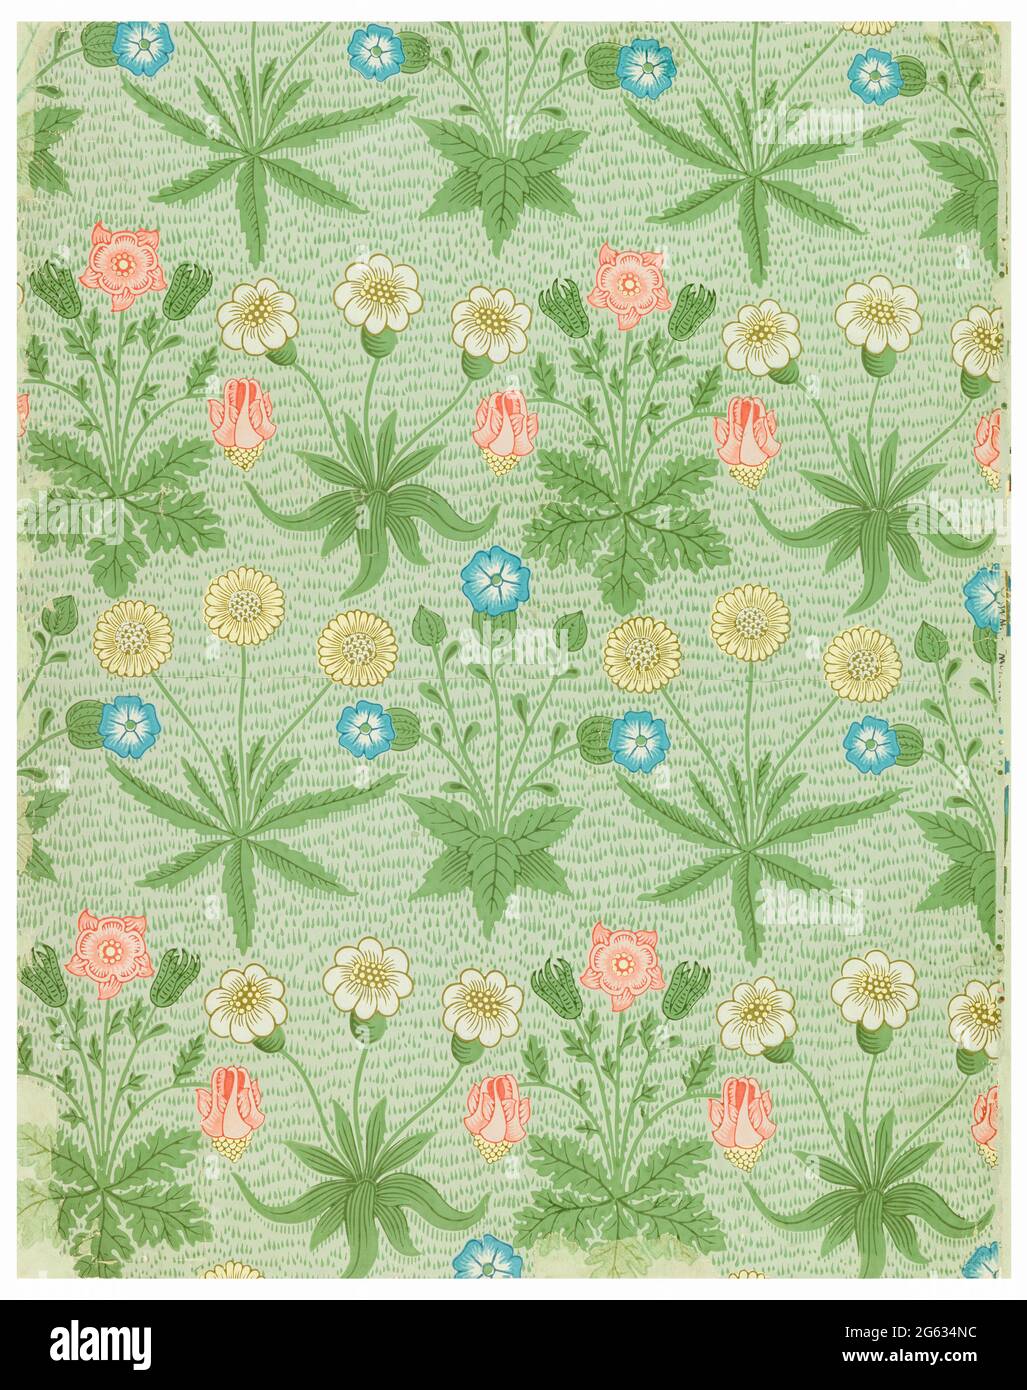 William Morris, Daisy, wallpaper pattern, 1864 Stock Photo - Alamy